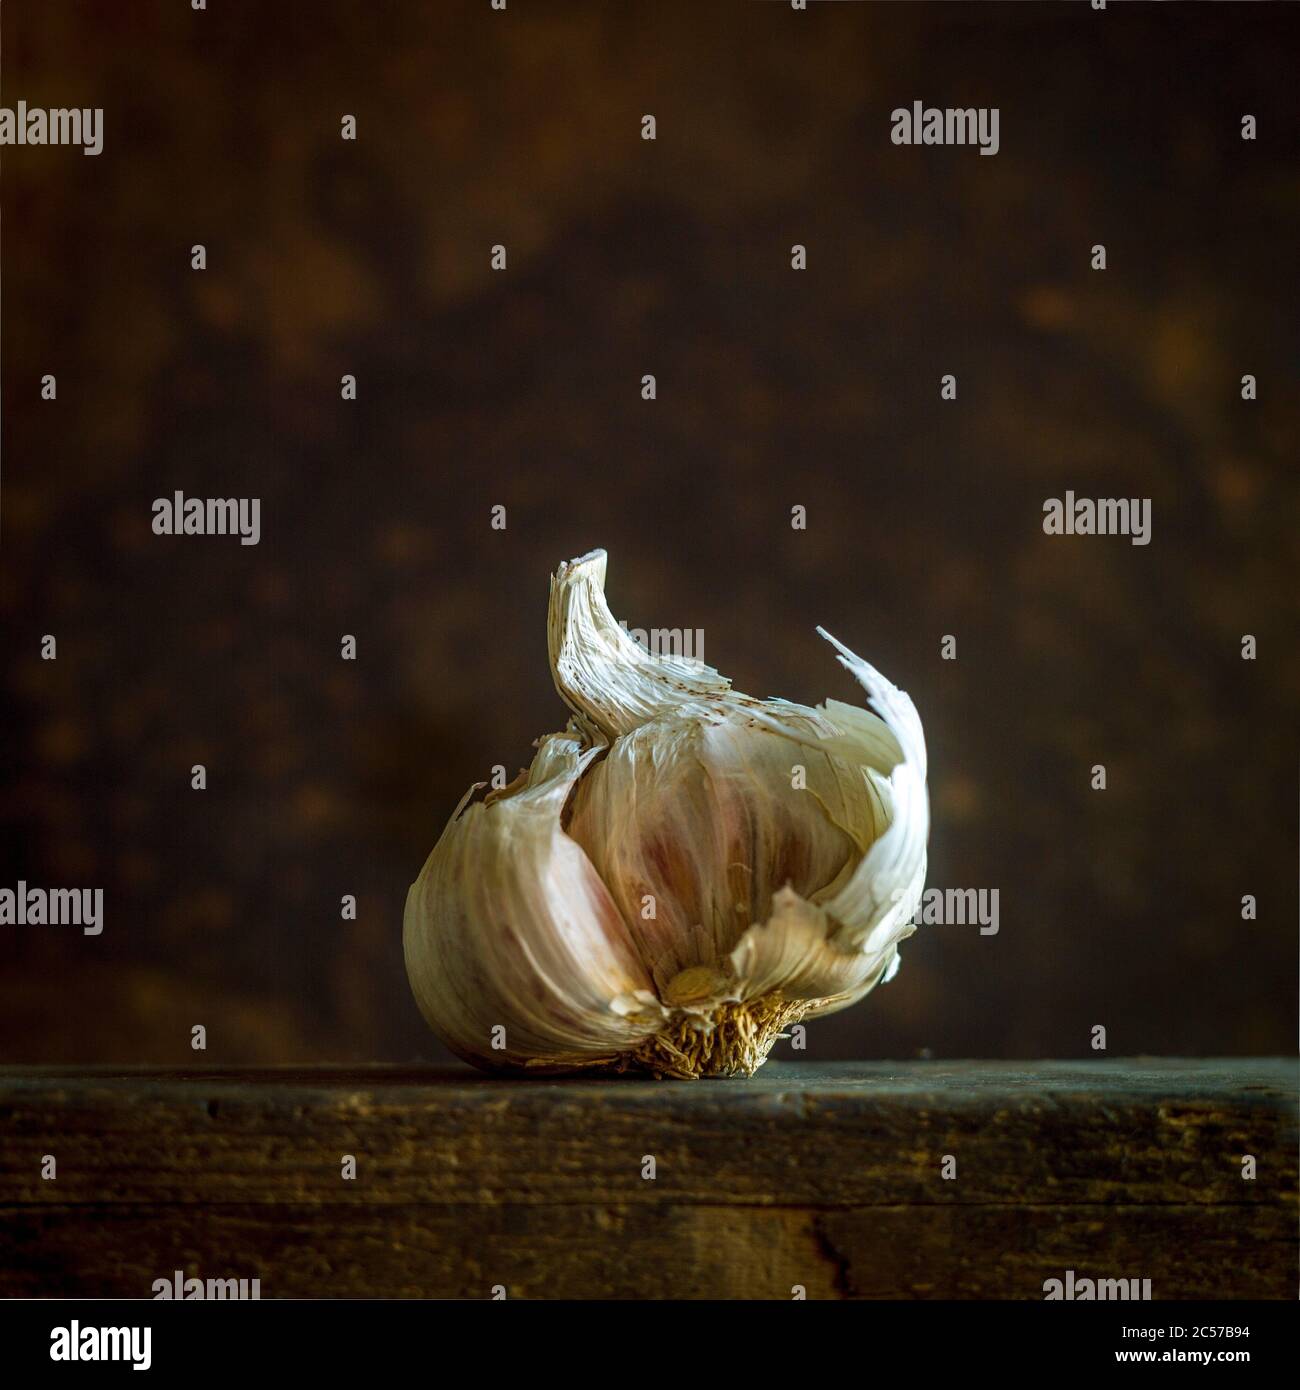 Closeup shot of fresh garlic on a wooden table Stock Photo